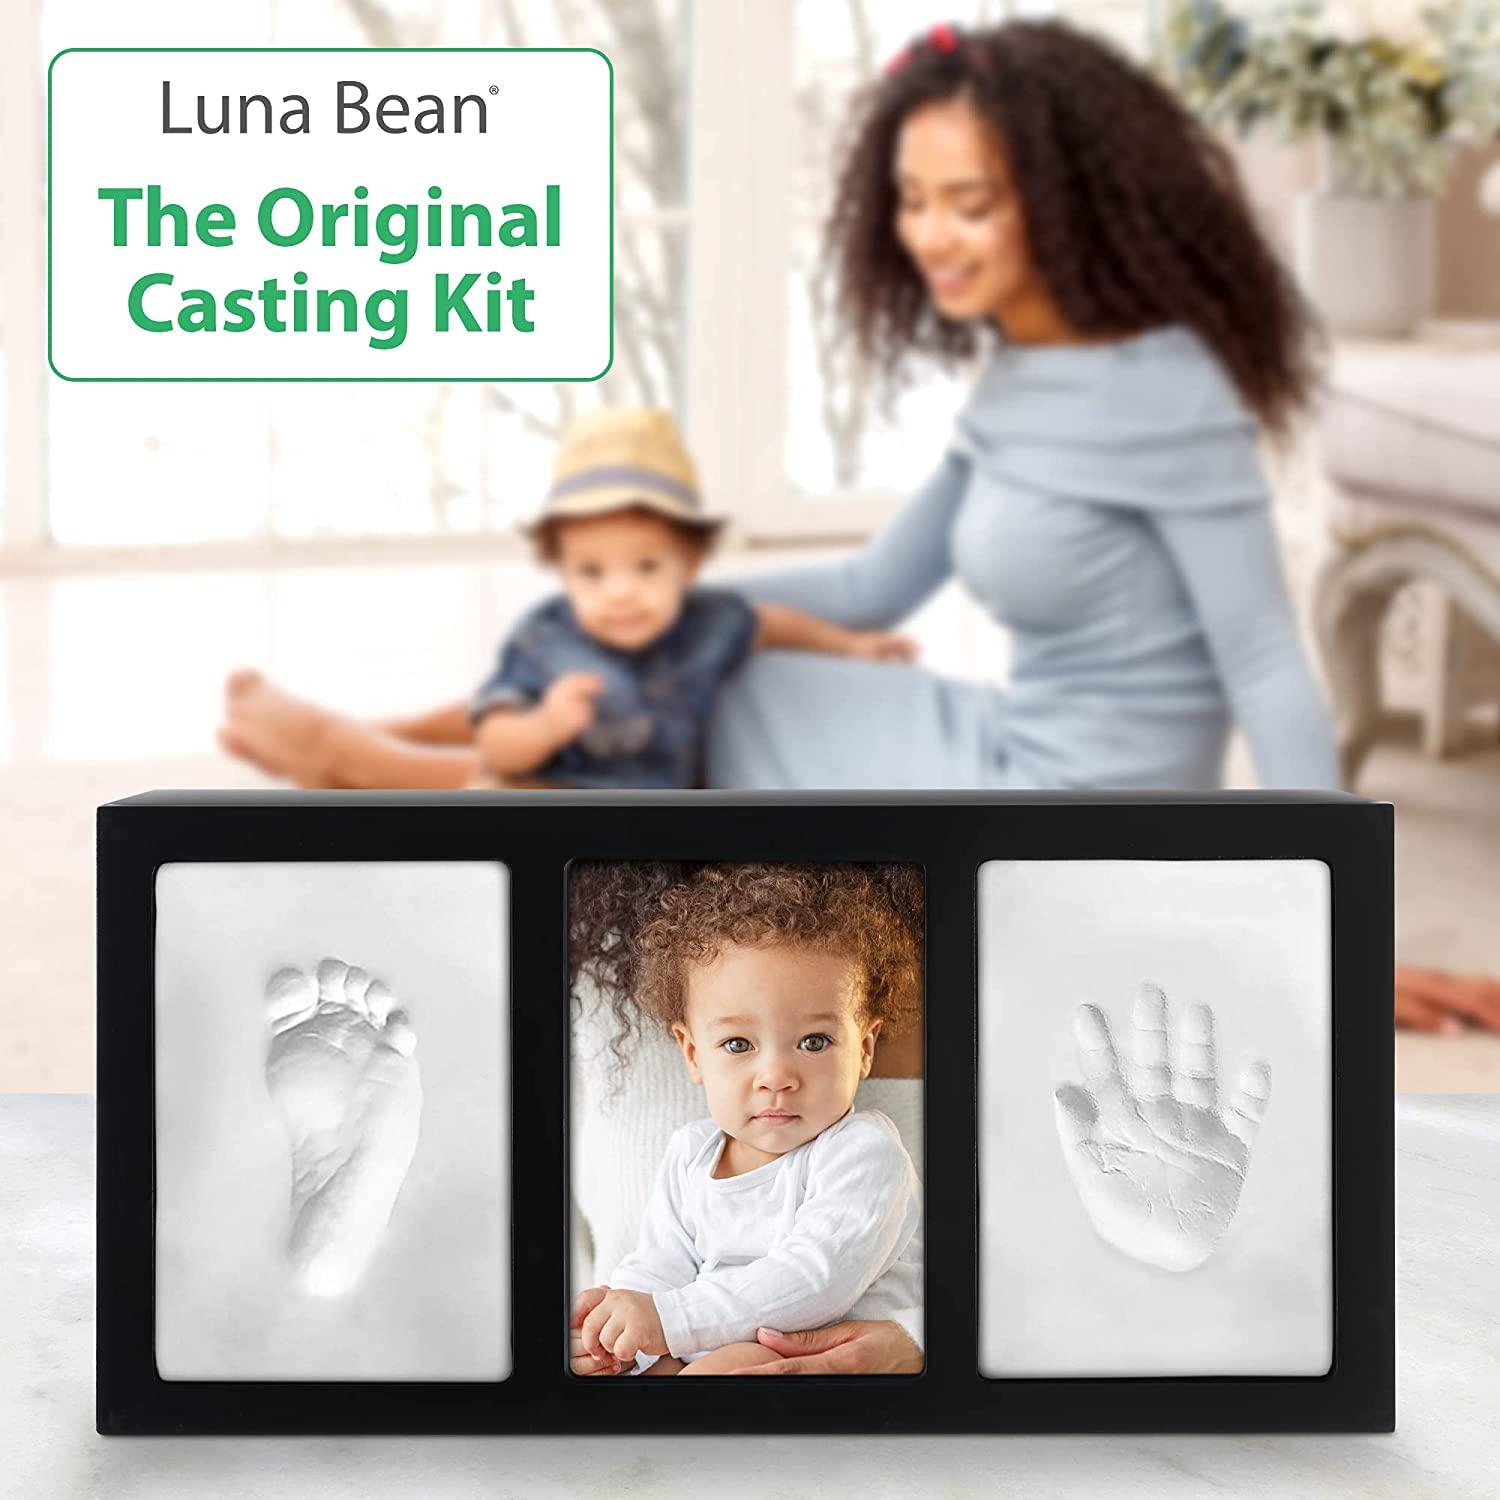 Baby Footprint Kit 